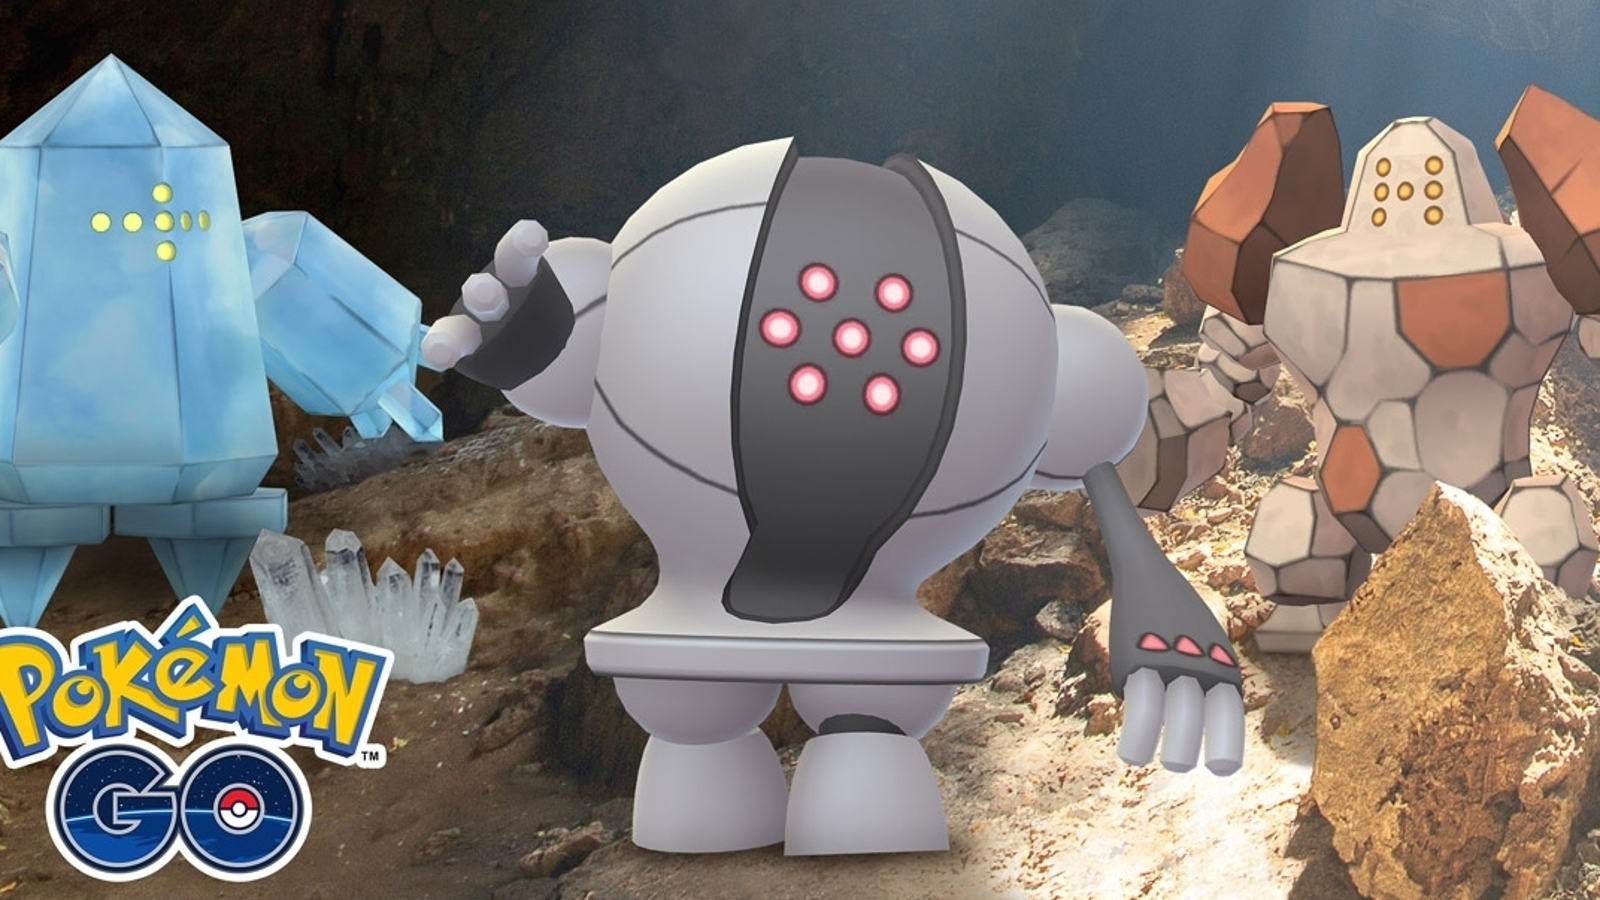 Groudon Pokémon GO: Fraquezas, melhores counters e como derrotar o